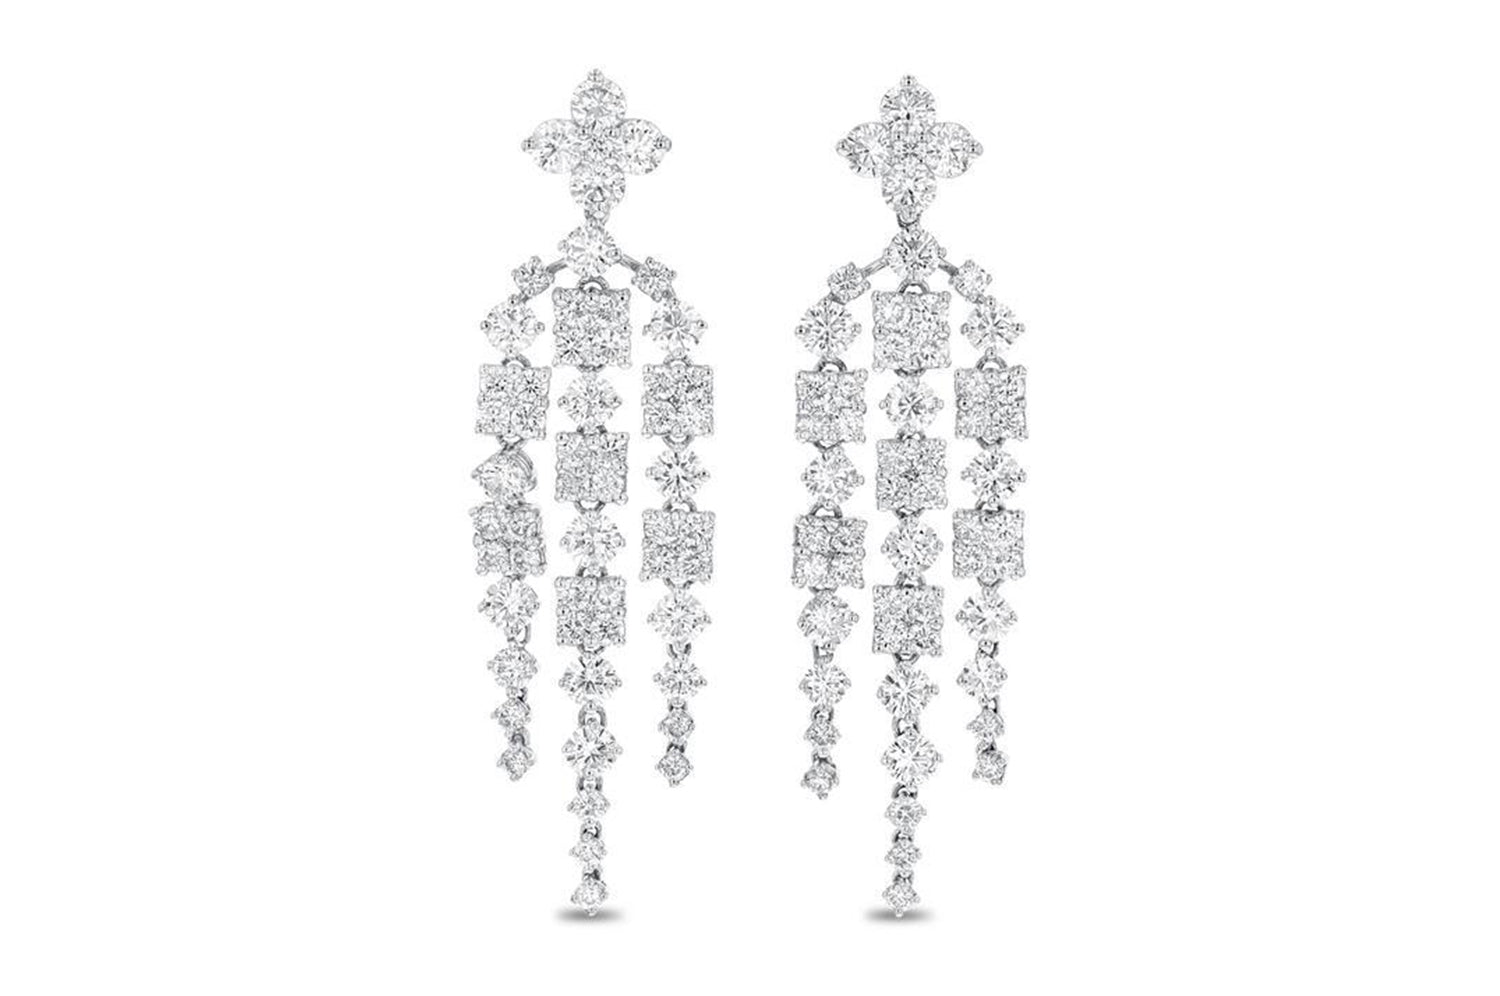 'Cannes' 18K White Gold Chandelier Earrings, 7.17 Carats